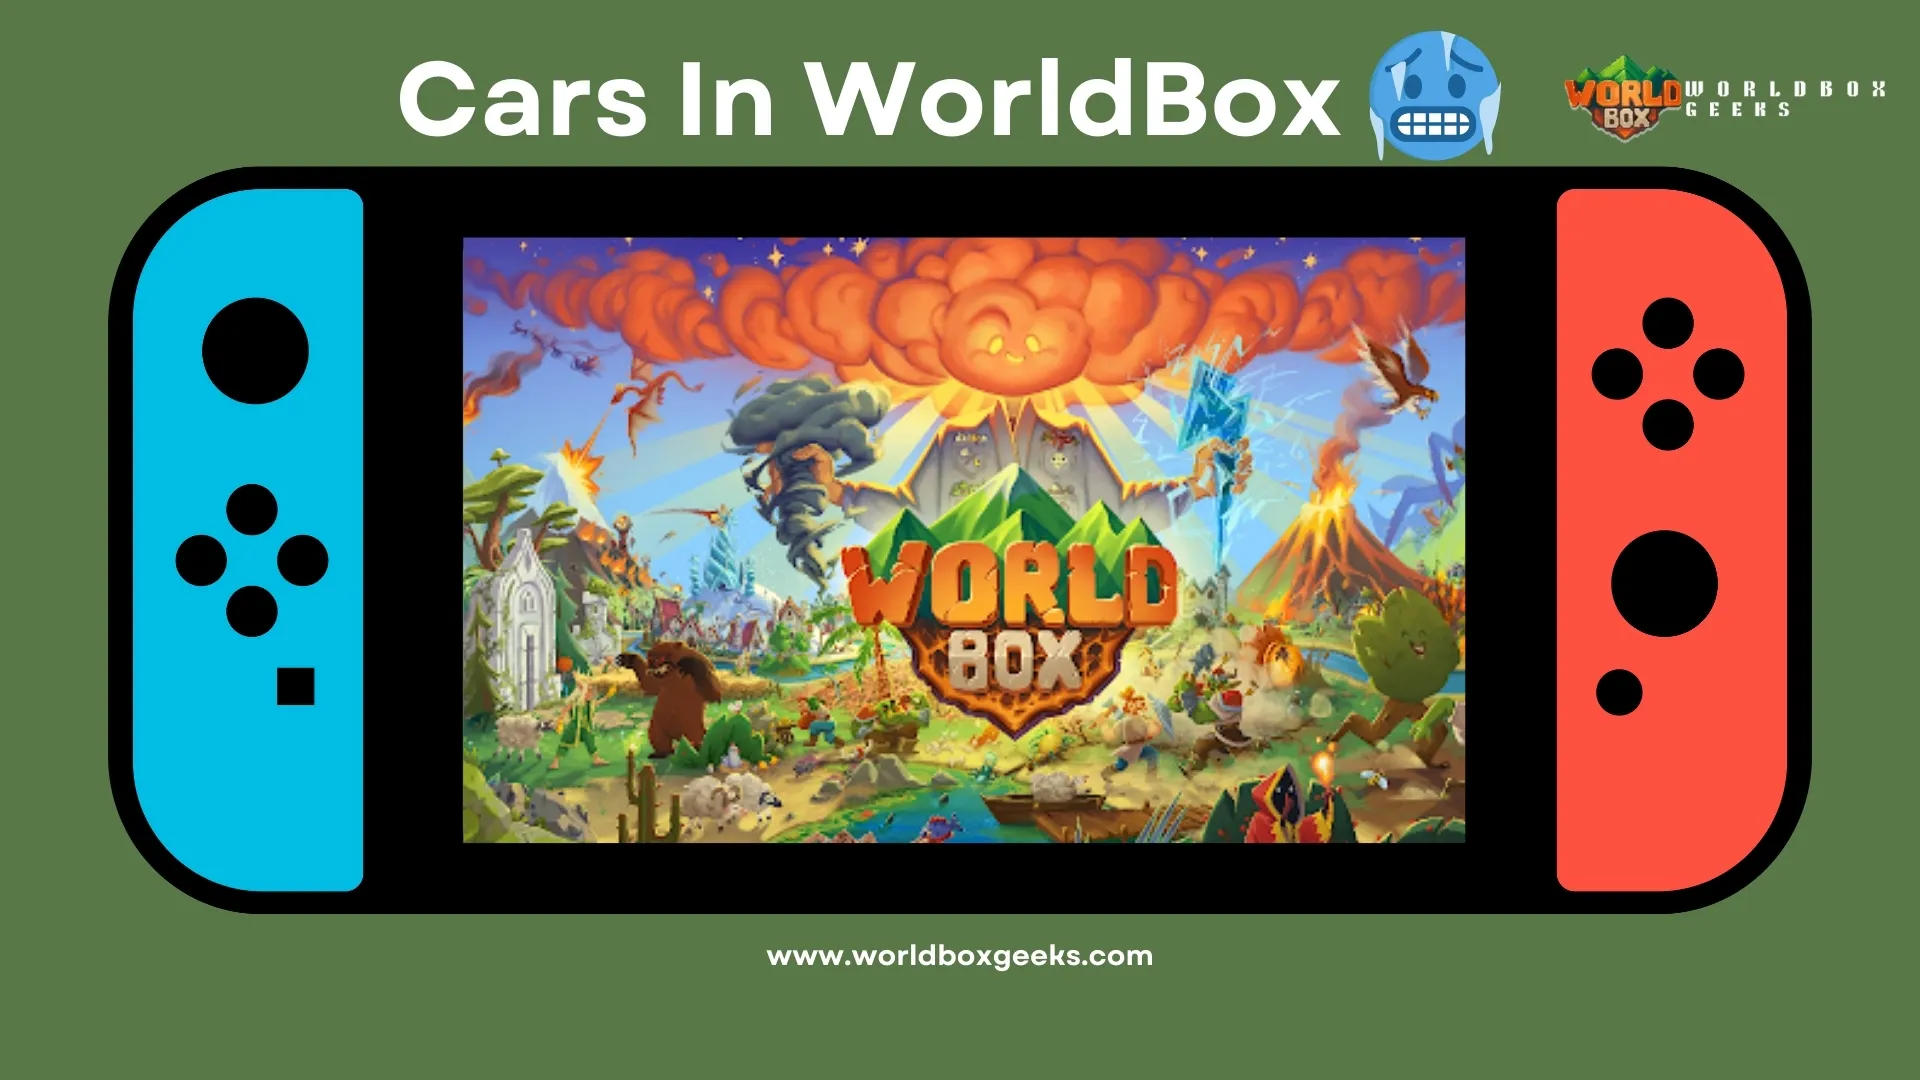 WorldBox Cars